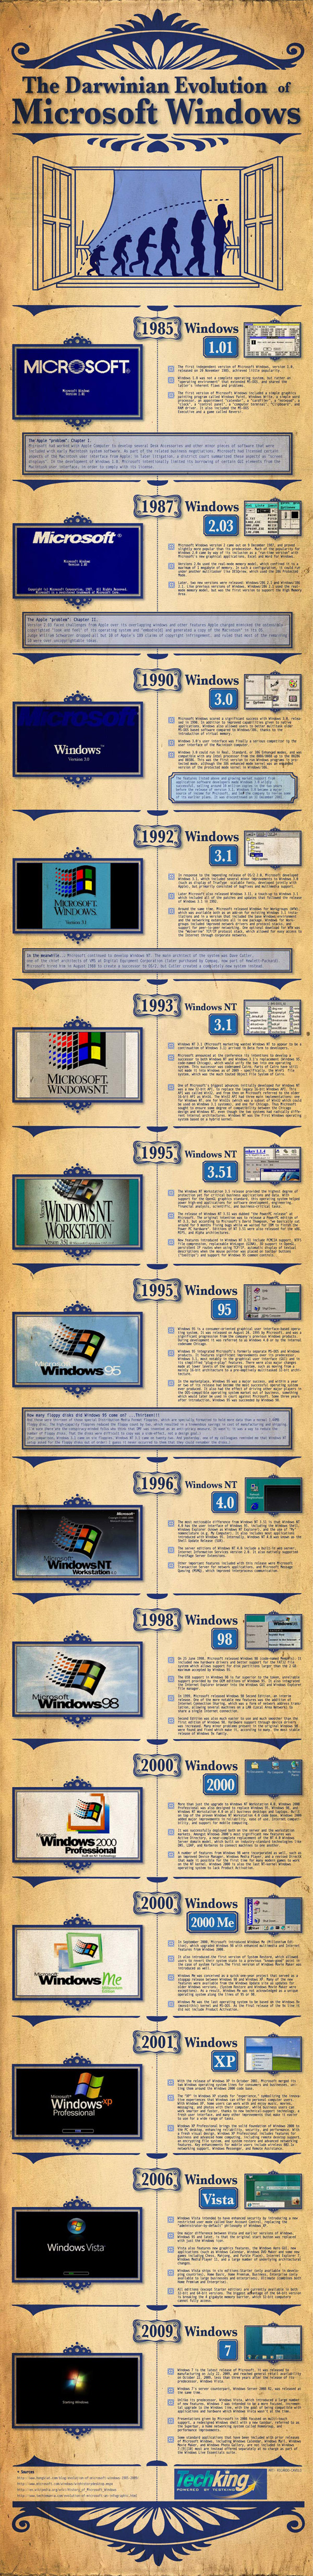 The Darwinian Evolution of Windows - Infographic